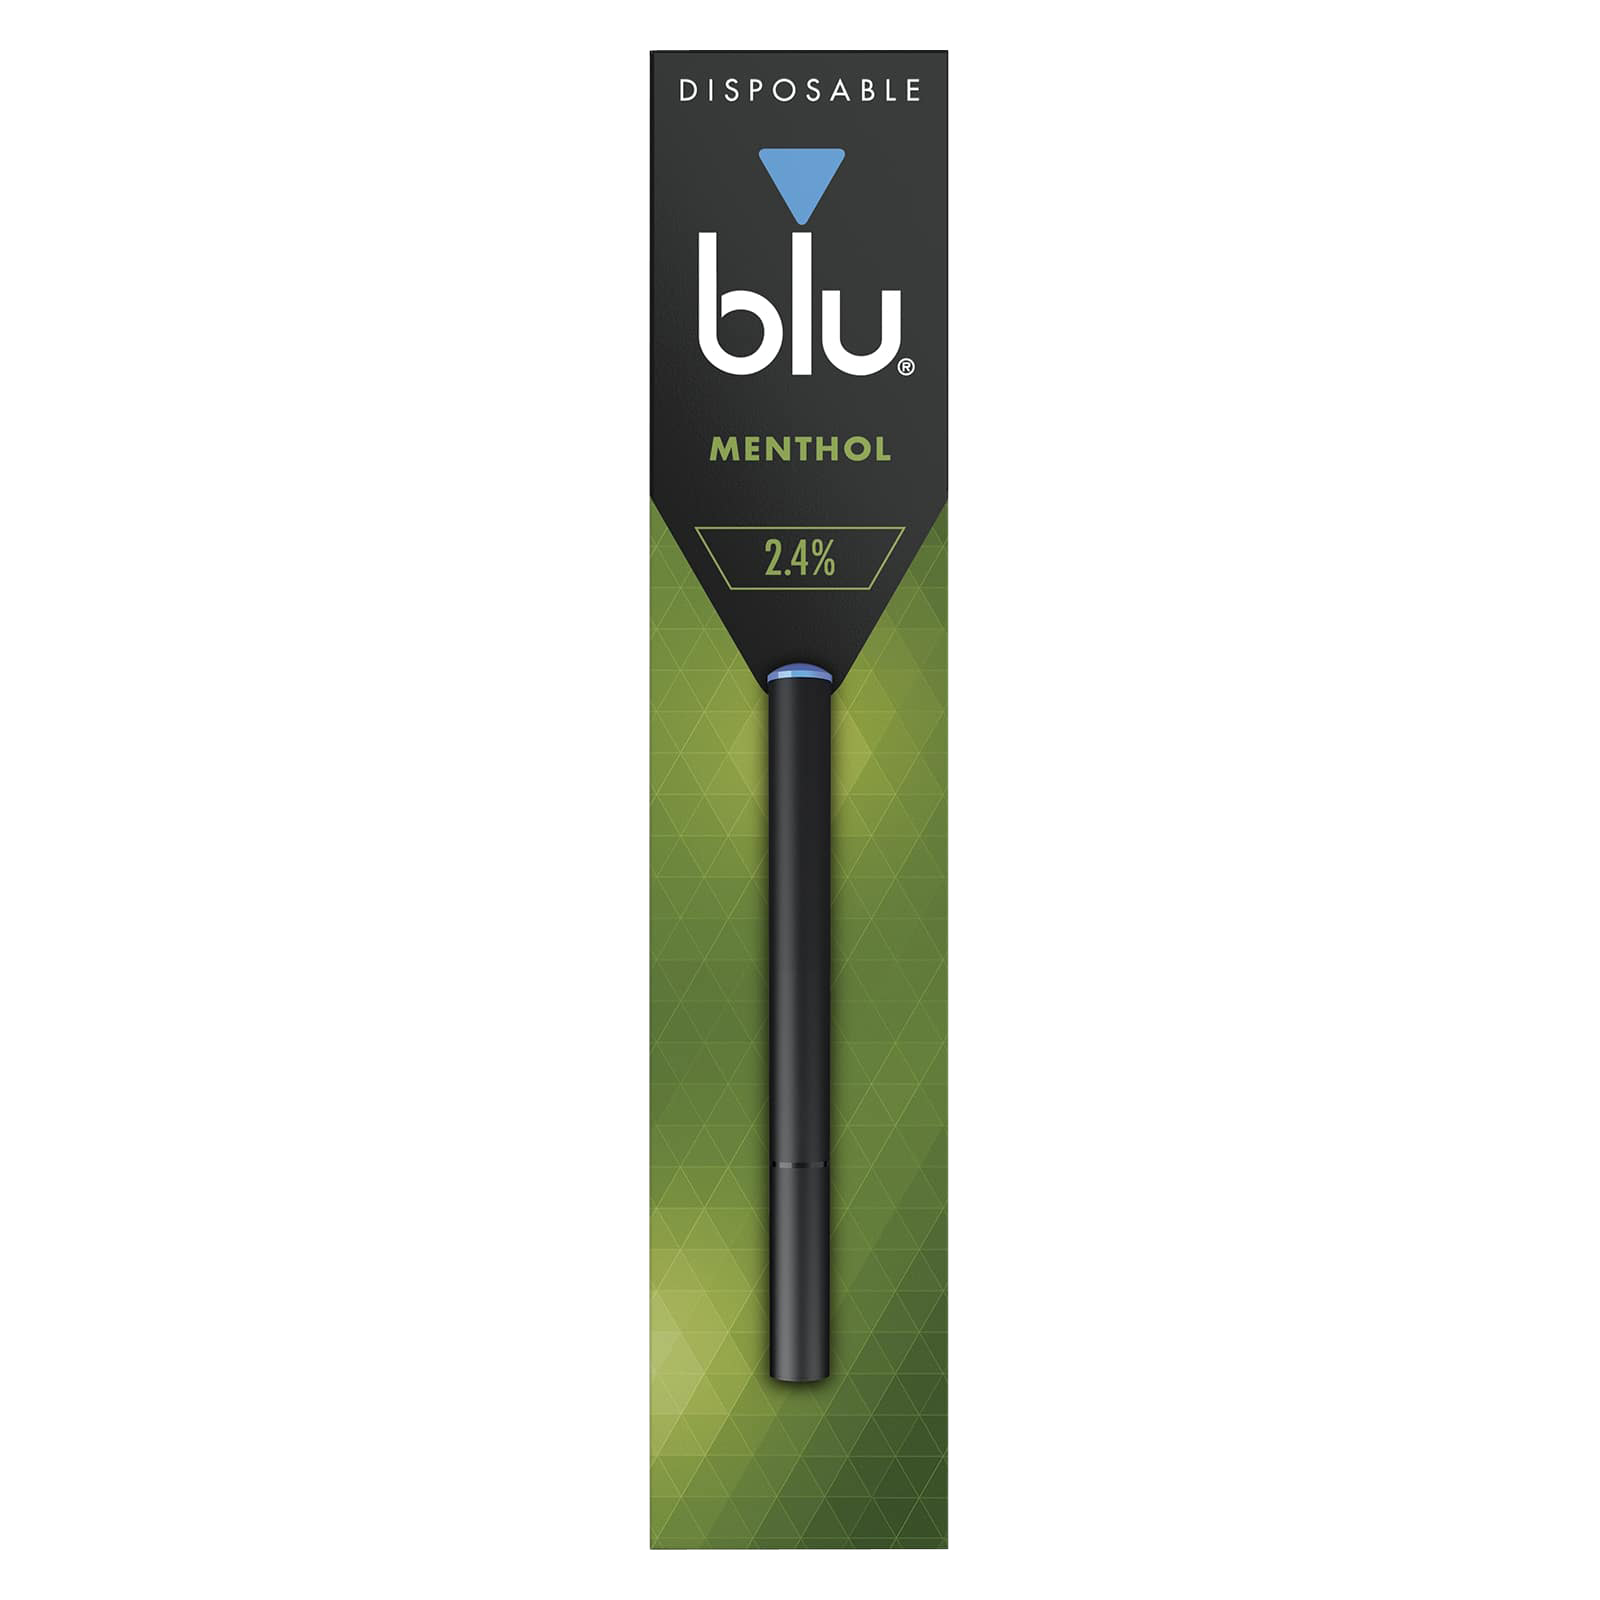 Blu Disposable Menthol E-cigarette 2.4%